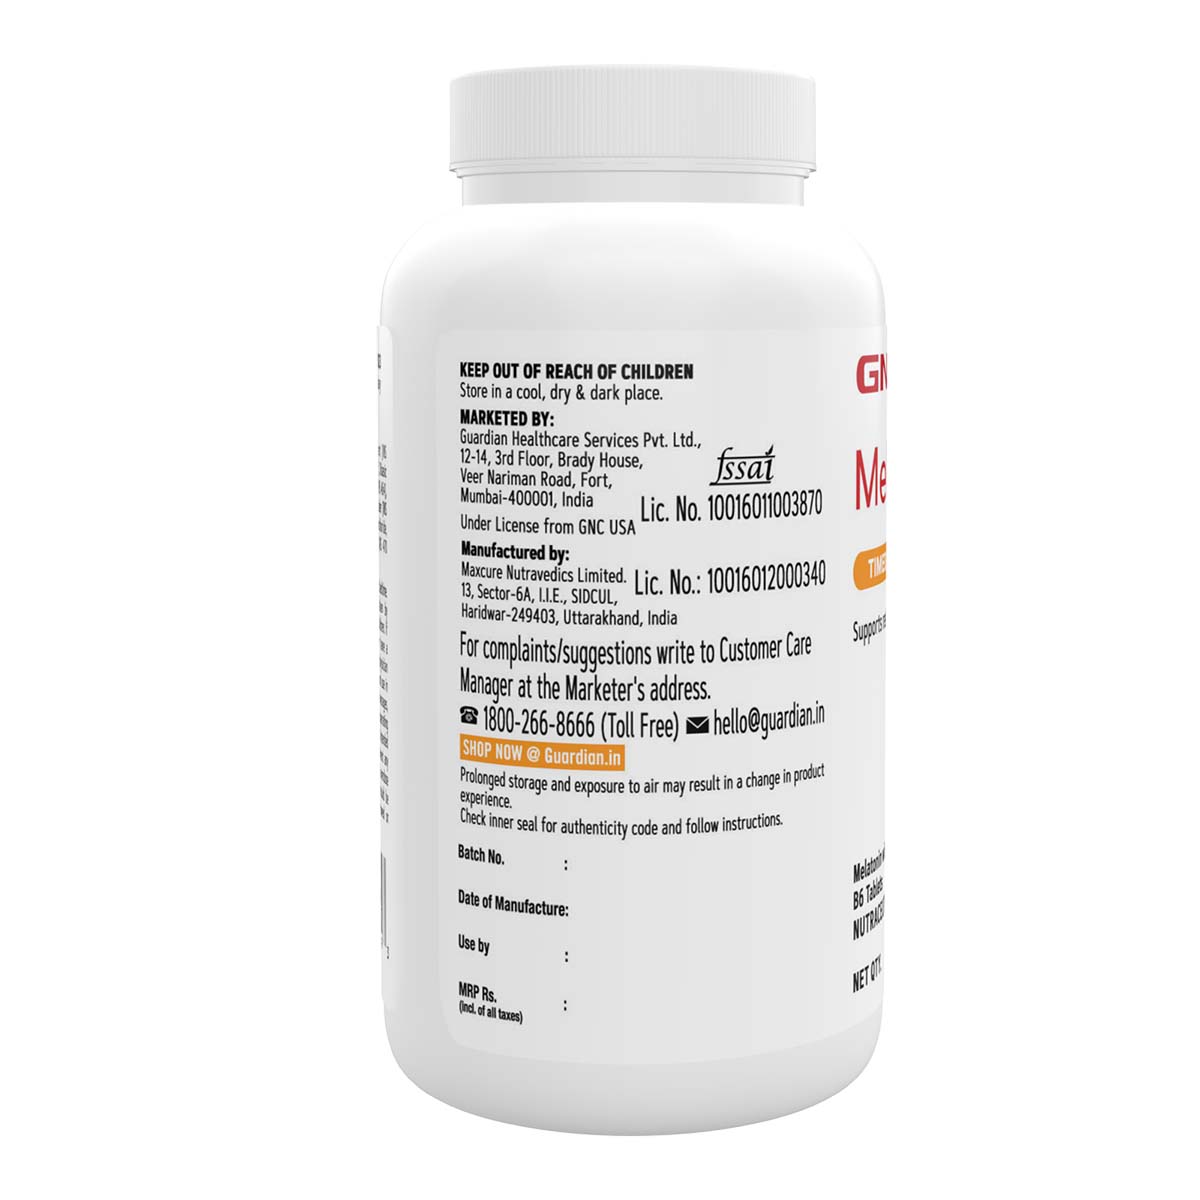 GNC Melatonin With Vitamin B6 - Tablets Promotes Restful Sleep & Relaxation